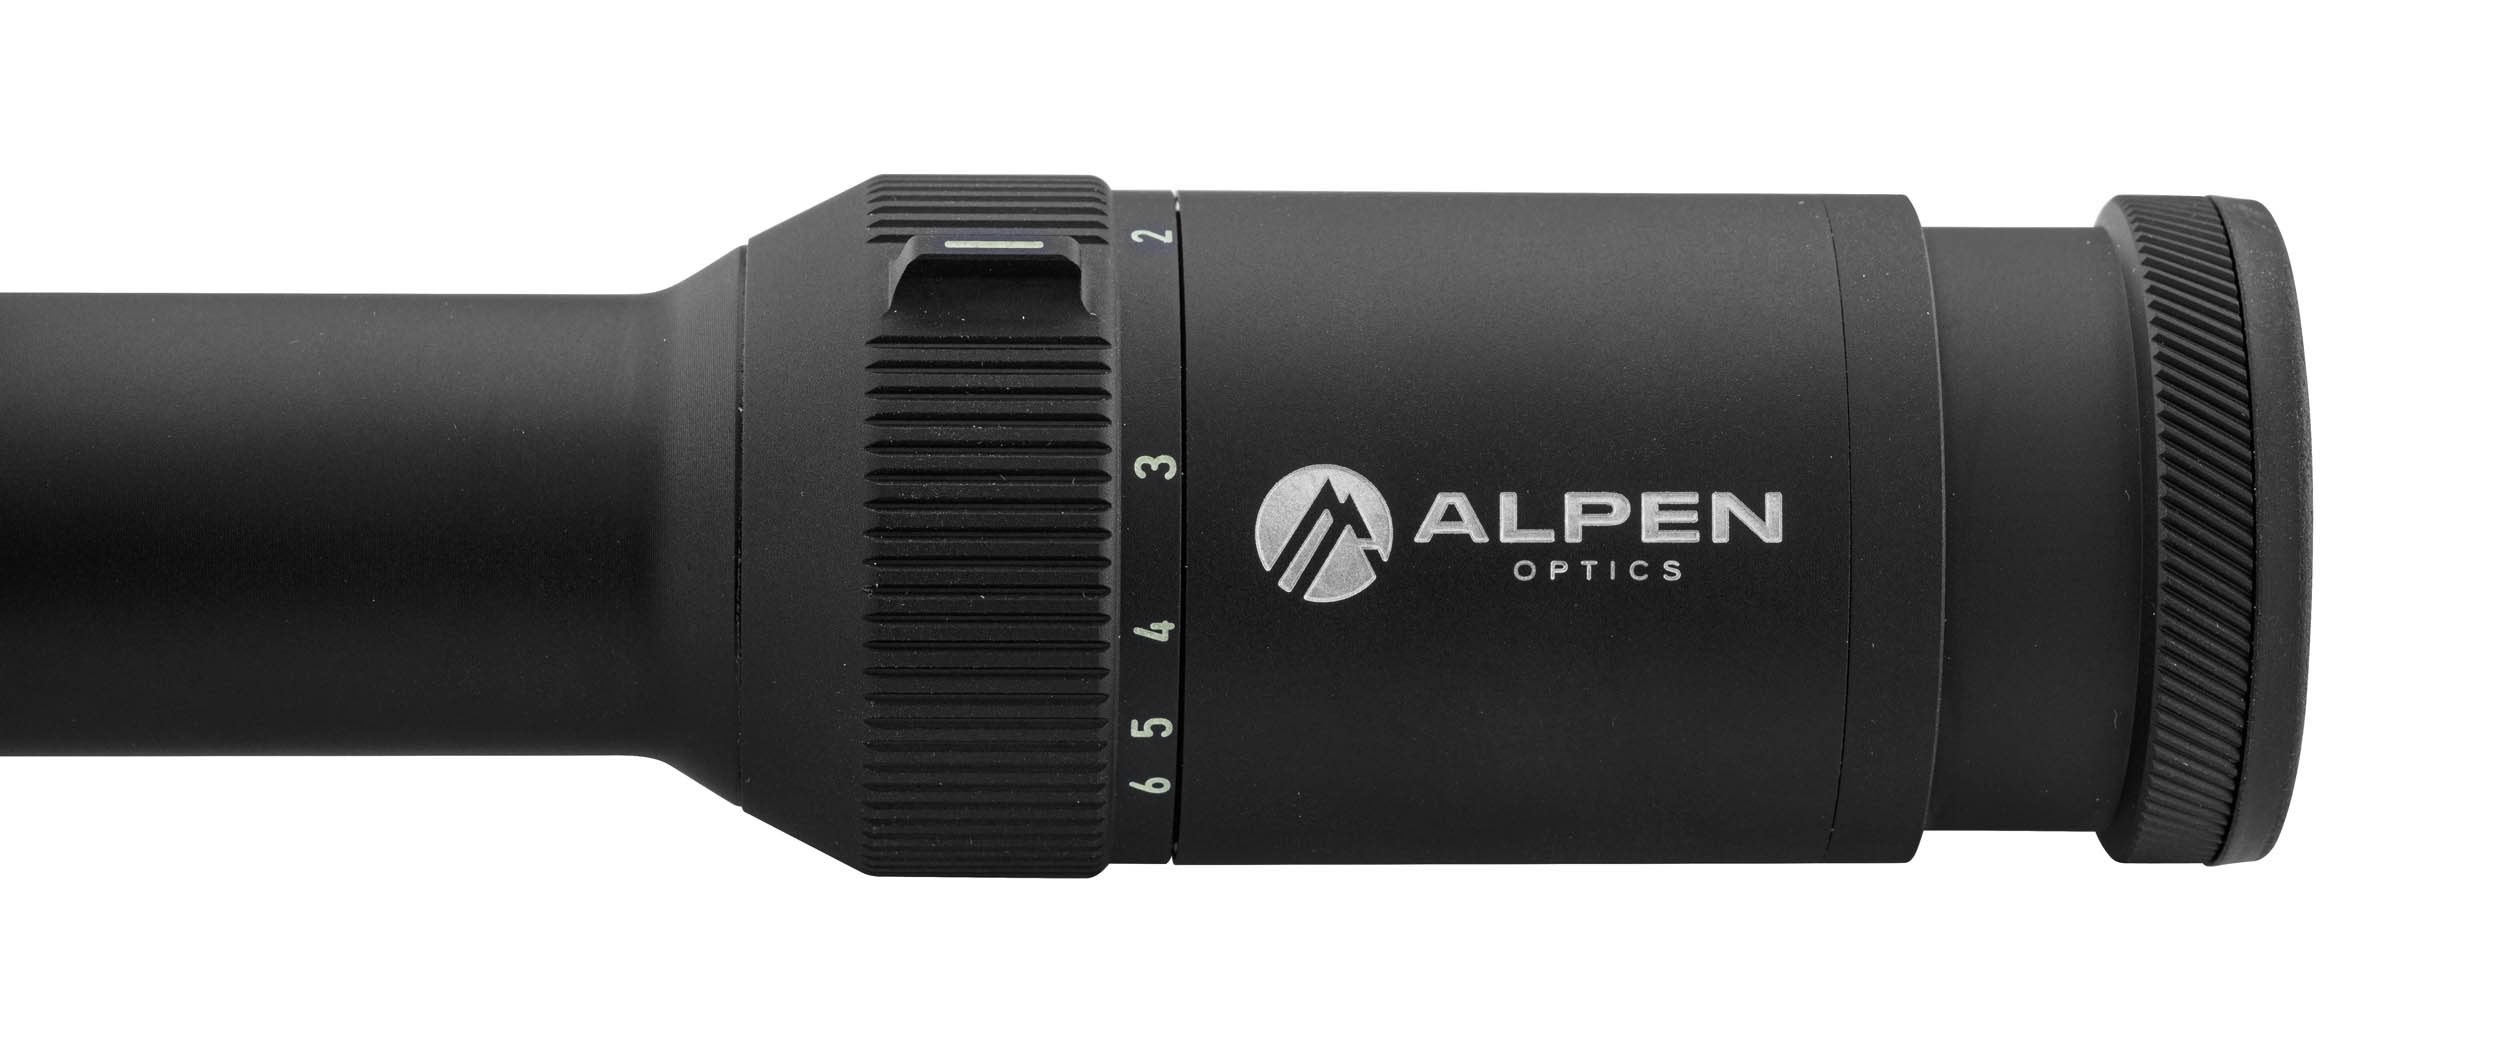 ALP201624-09 ScopeAlpen Apex XP 1-6x24 Duplex Smartdot